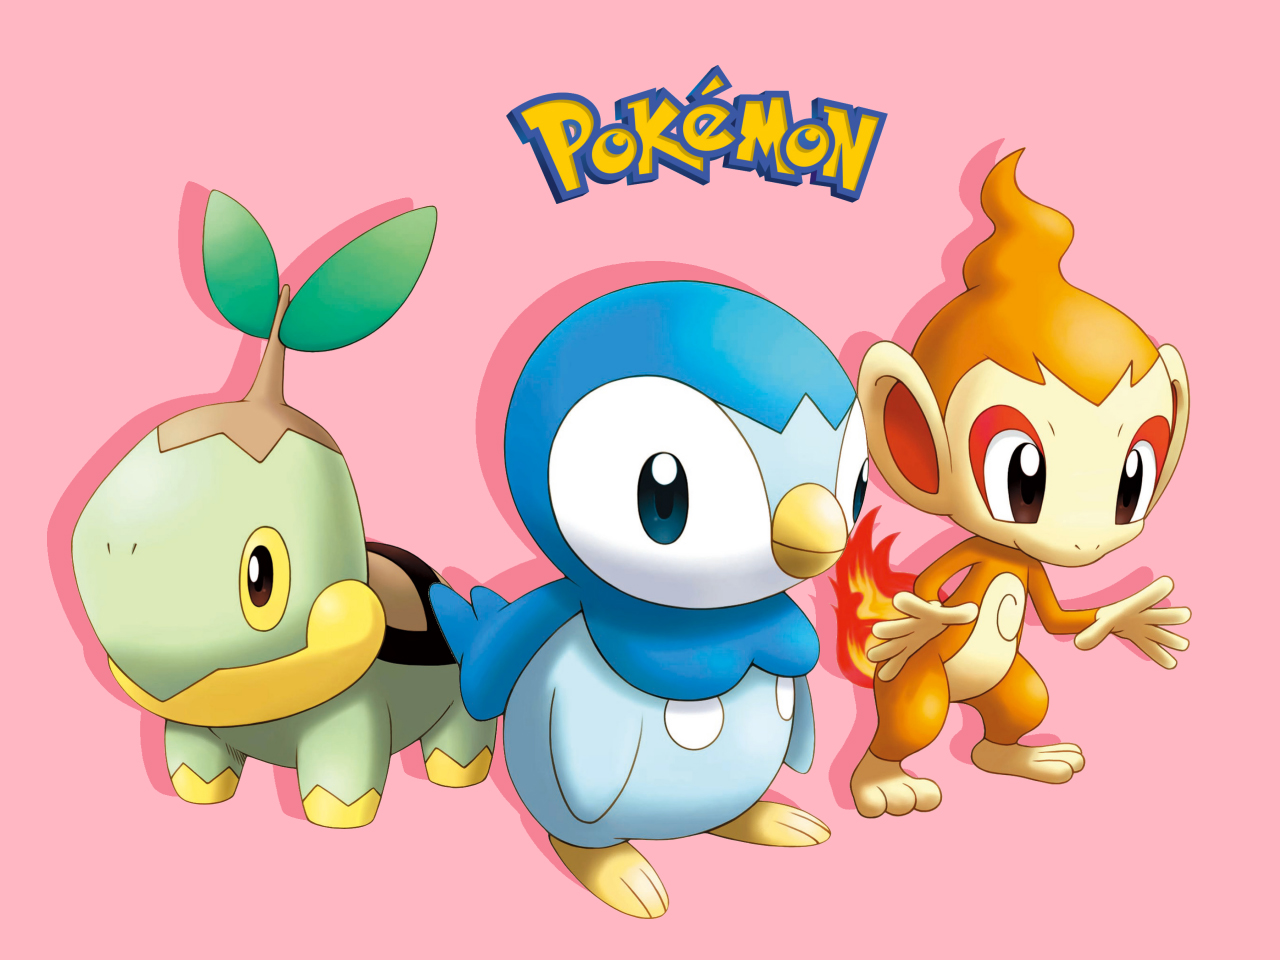 video game, chimchar (pokémon), piplup (pokémon), starter pokemon, turtwig (pokémon), pokémon